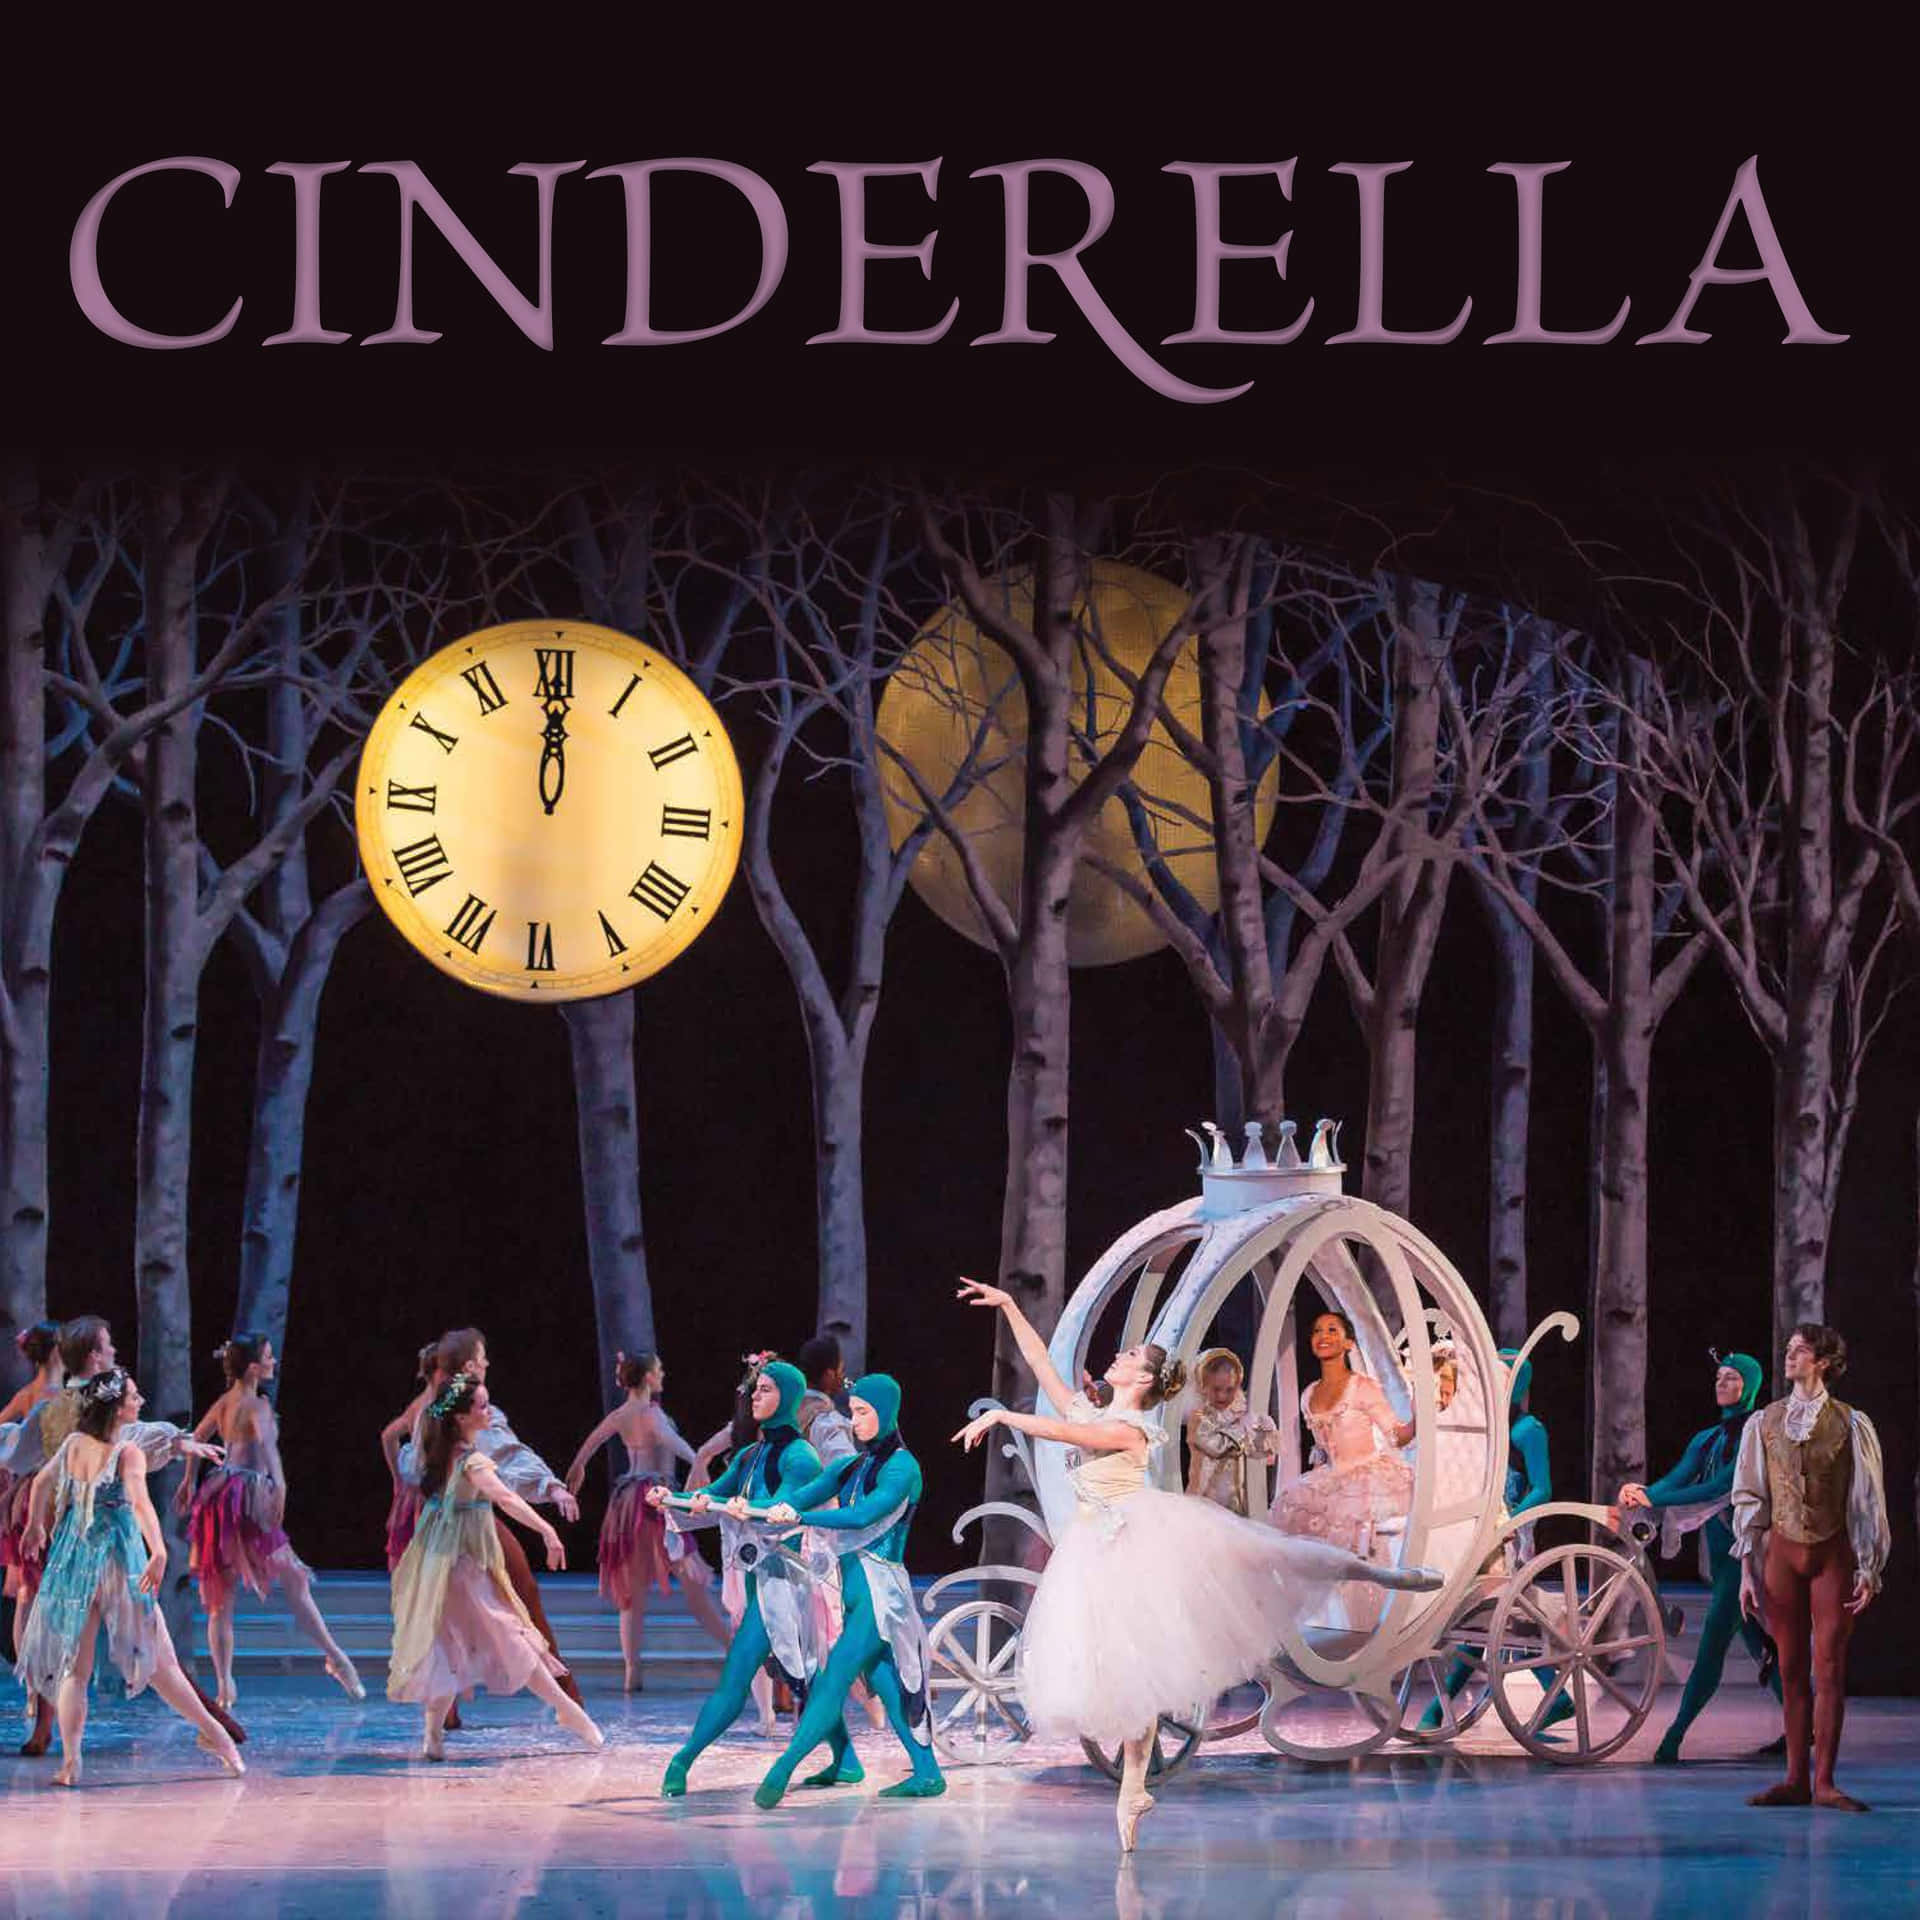 Step into a fairytale - Cinderella's magical moment